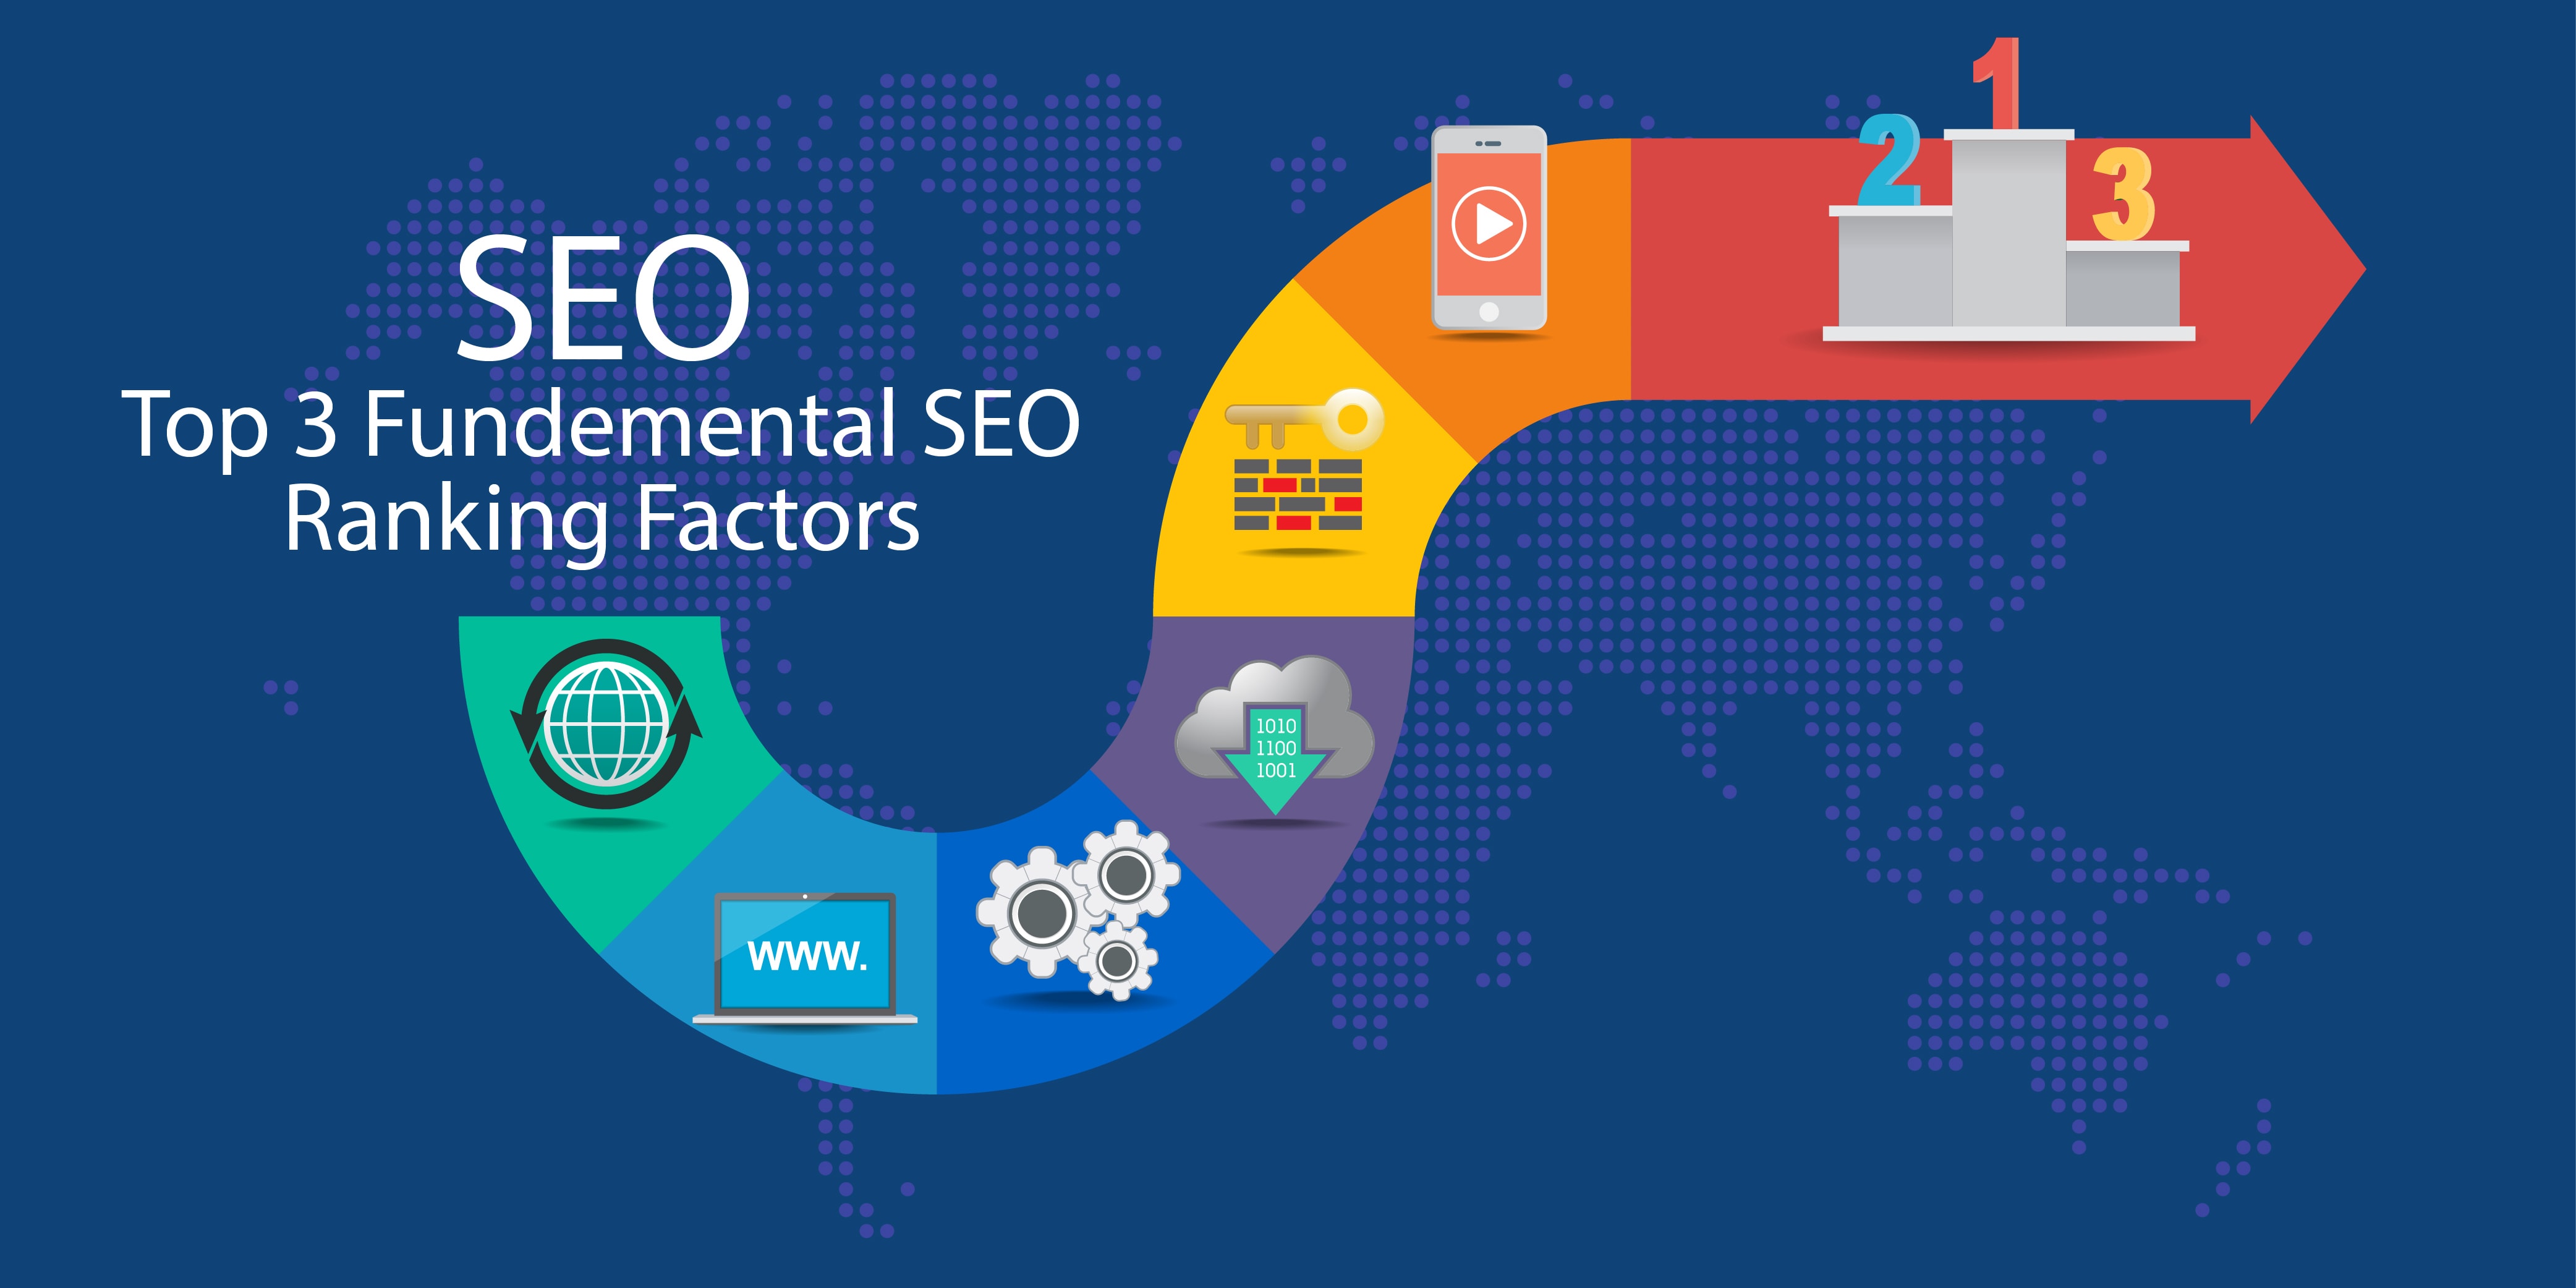 Top 3 Fundamental SEO Ranking Factors When Ranking A Website